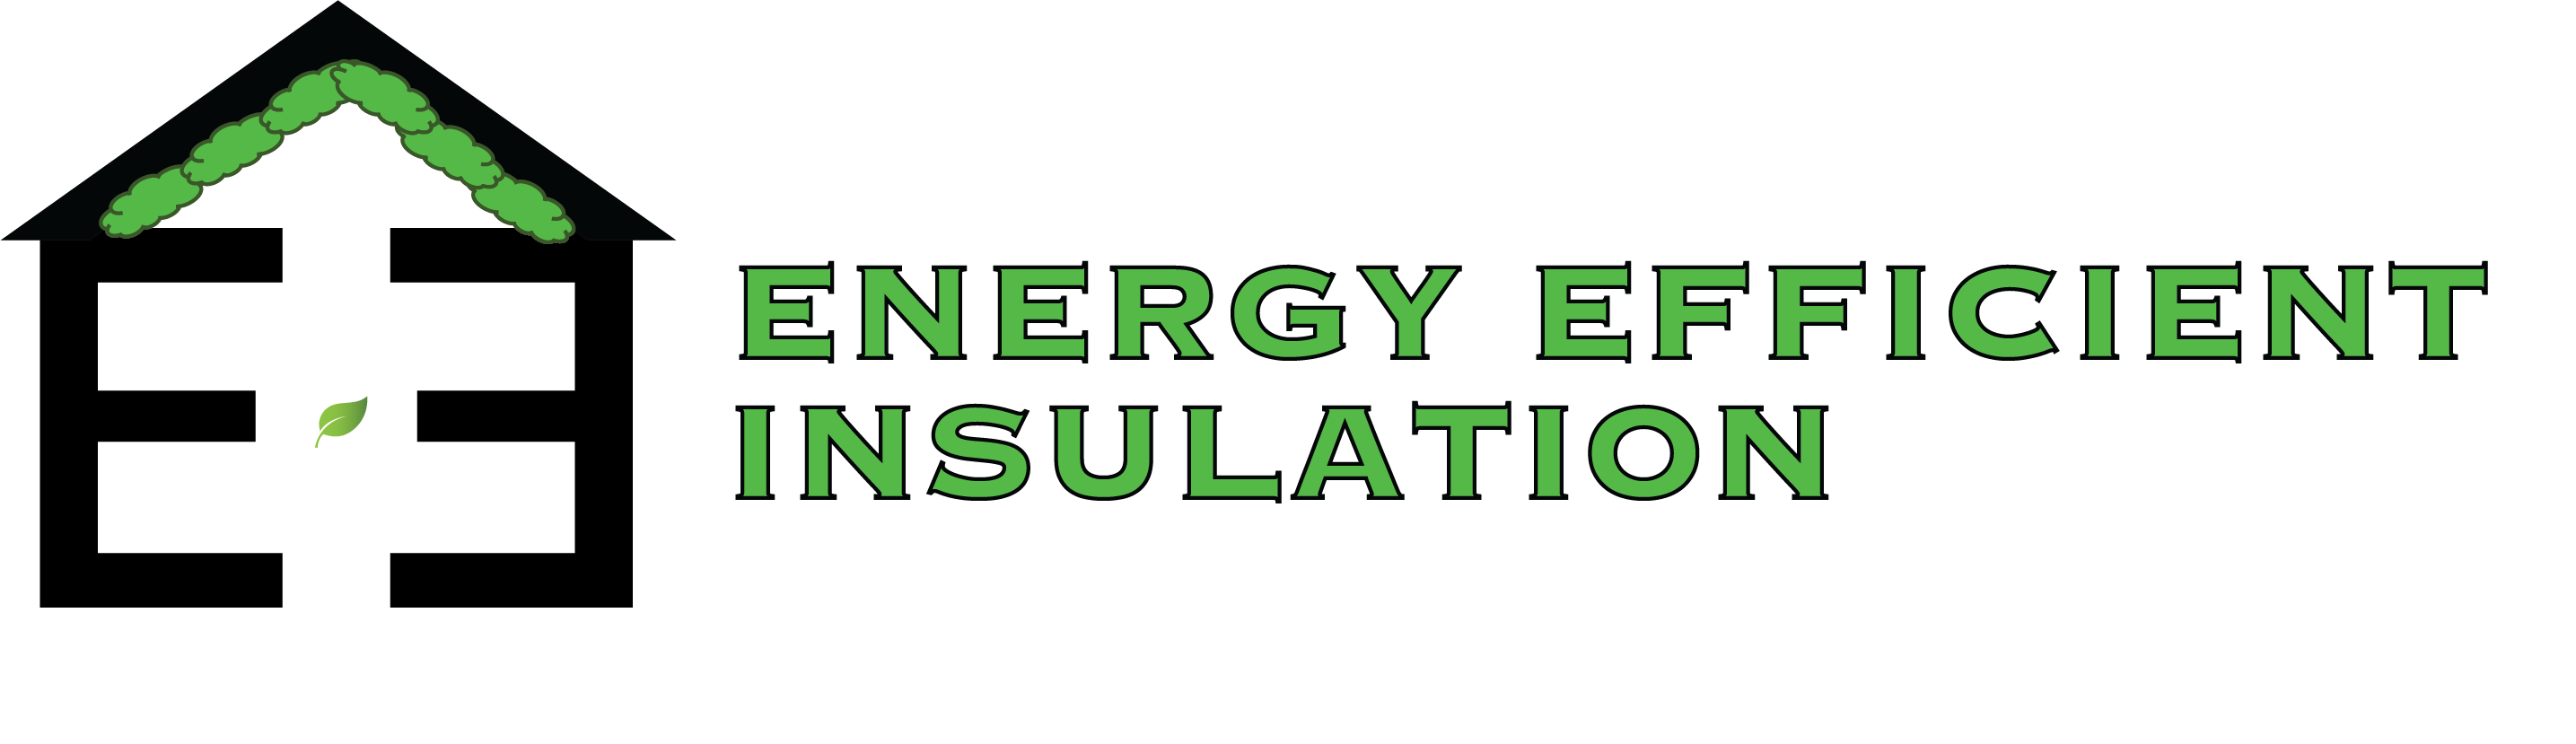 Energy Efficient Insulation Home Insulation Contractors